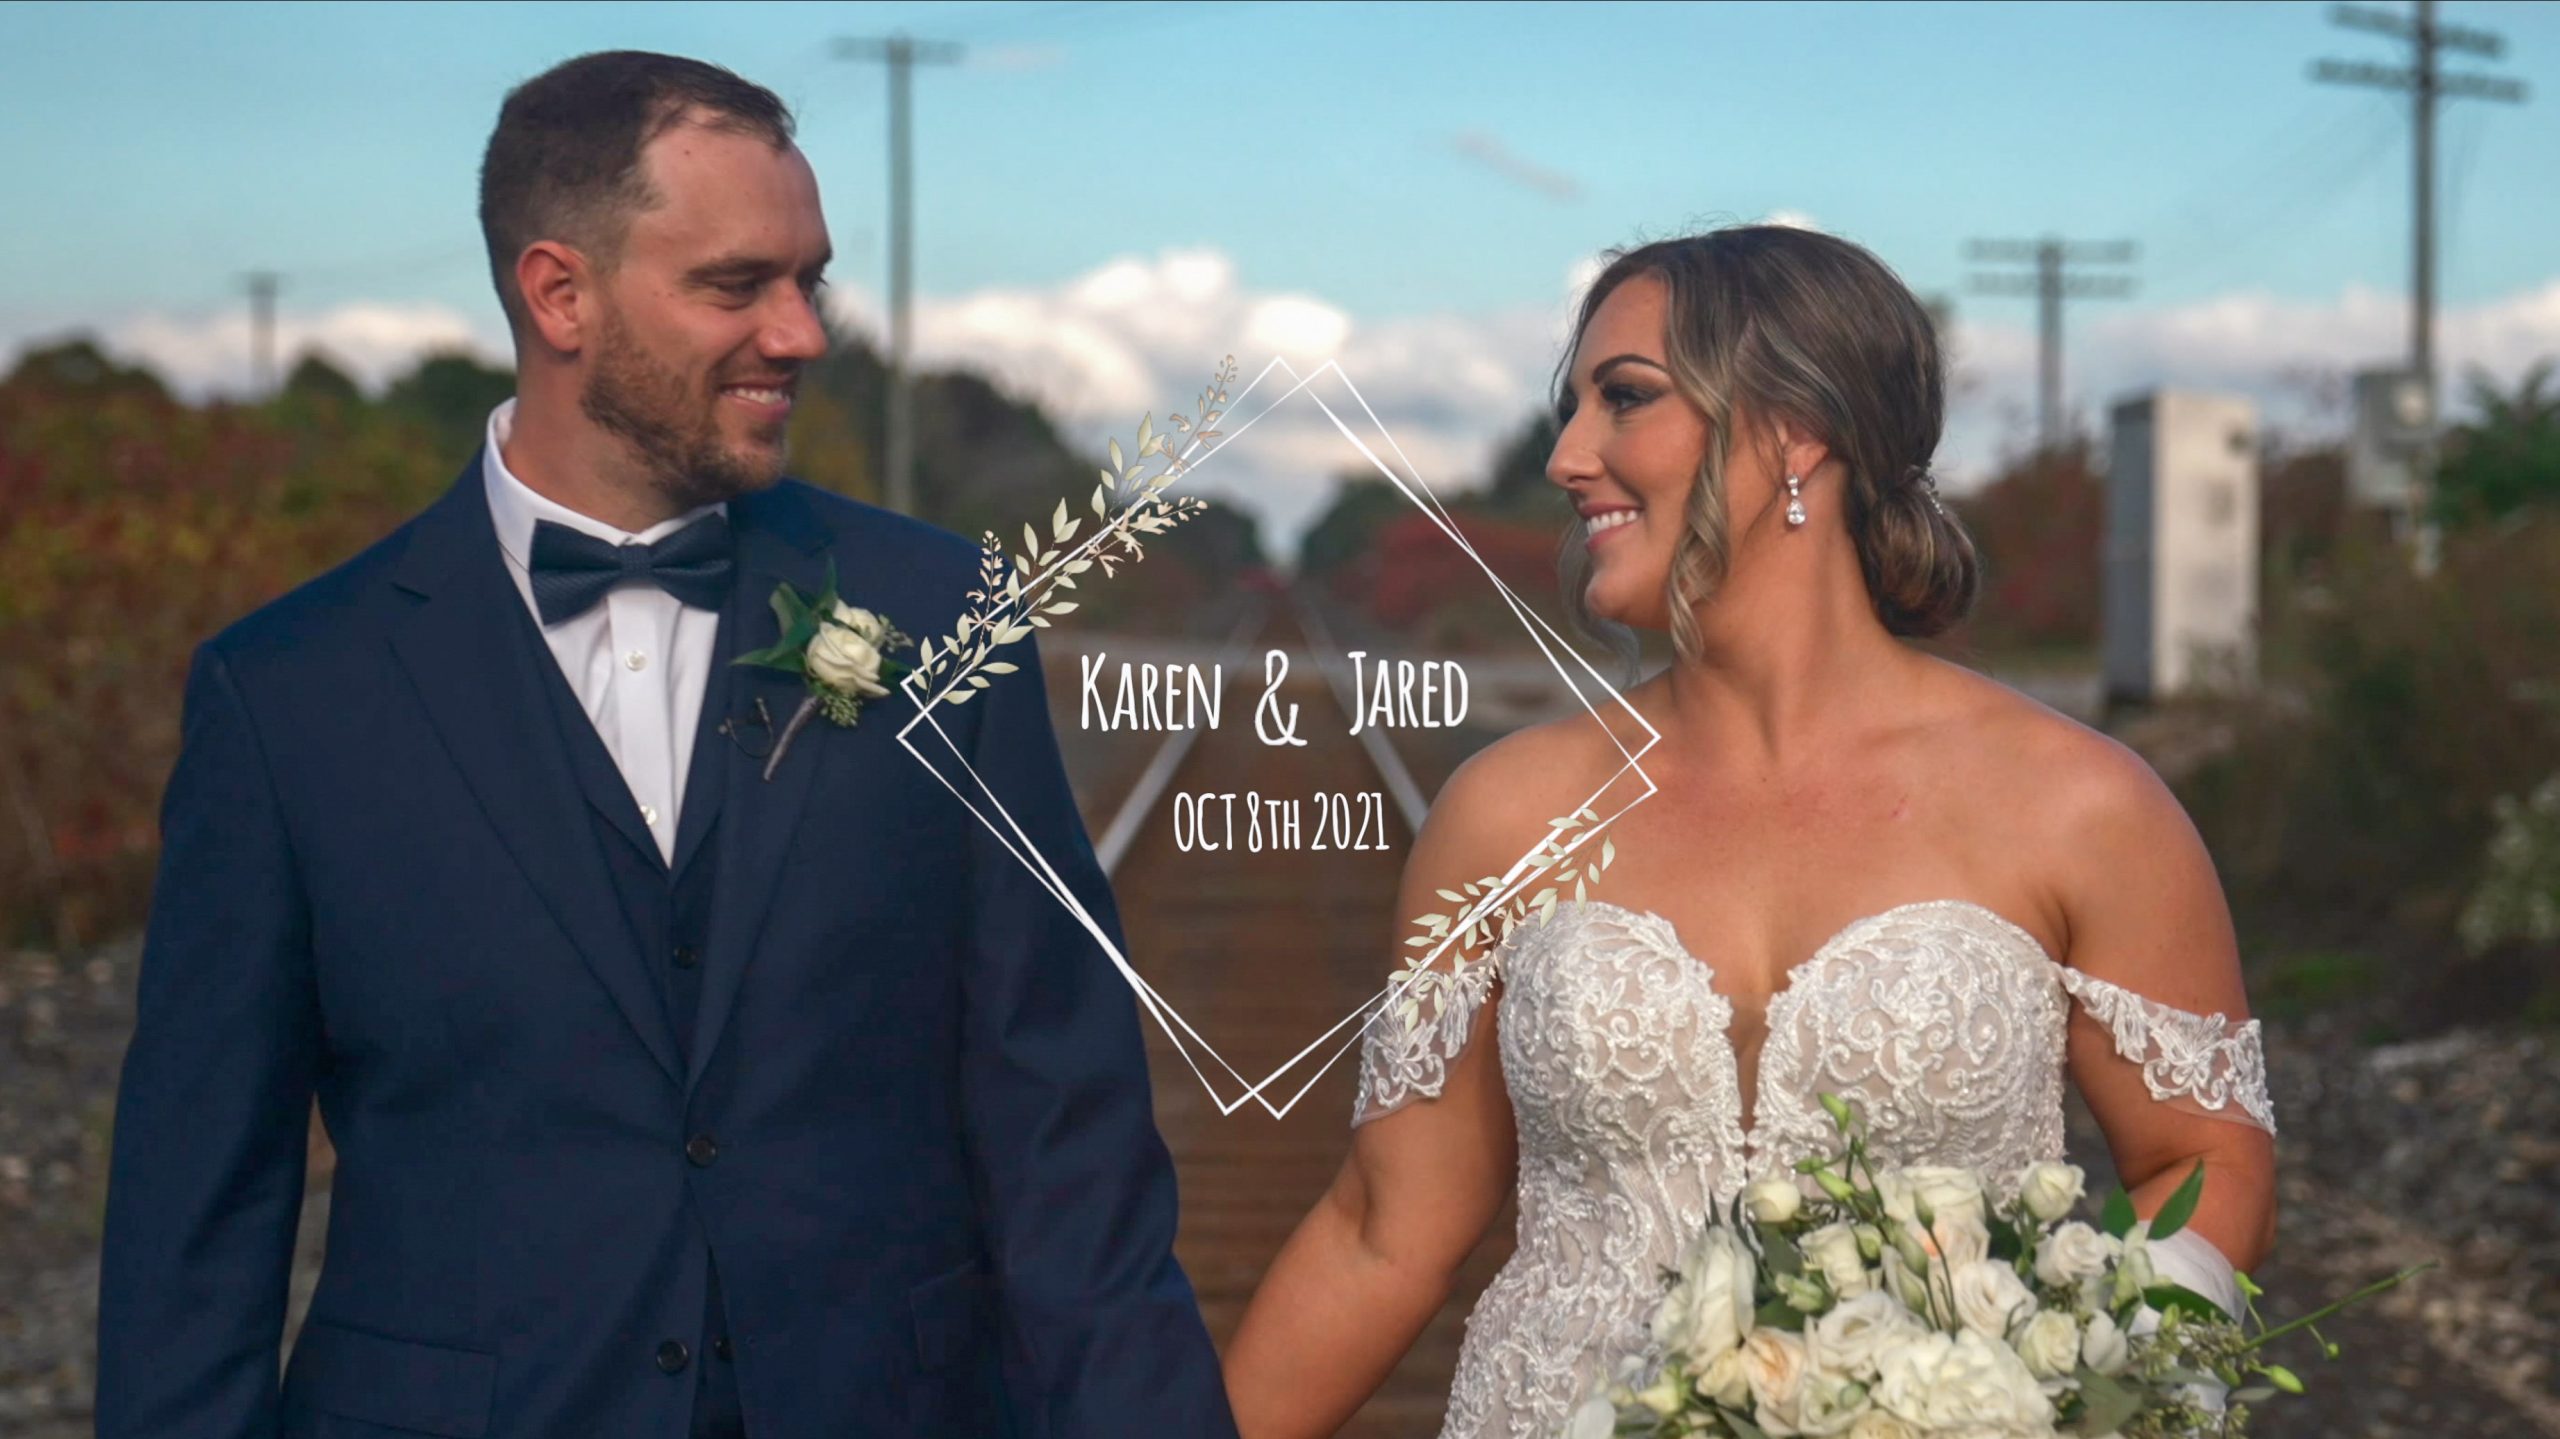 Karen & Jared’s Wedding